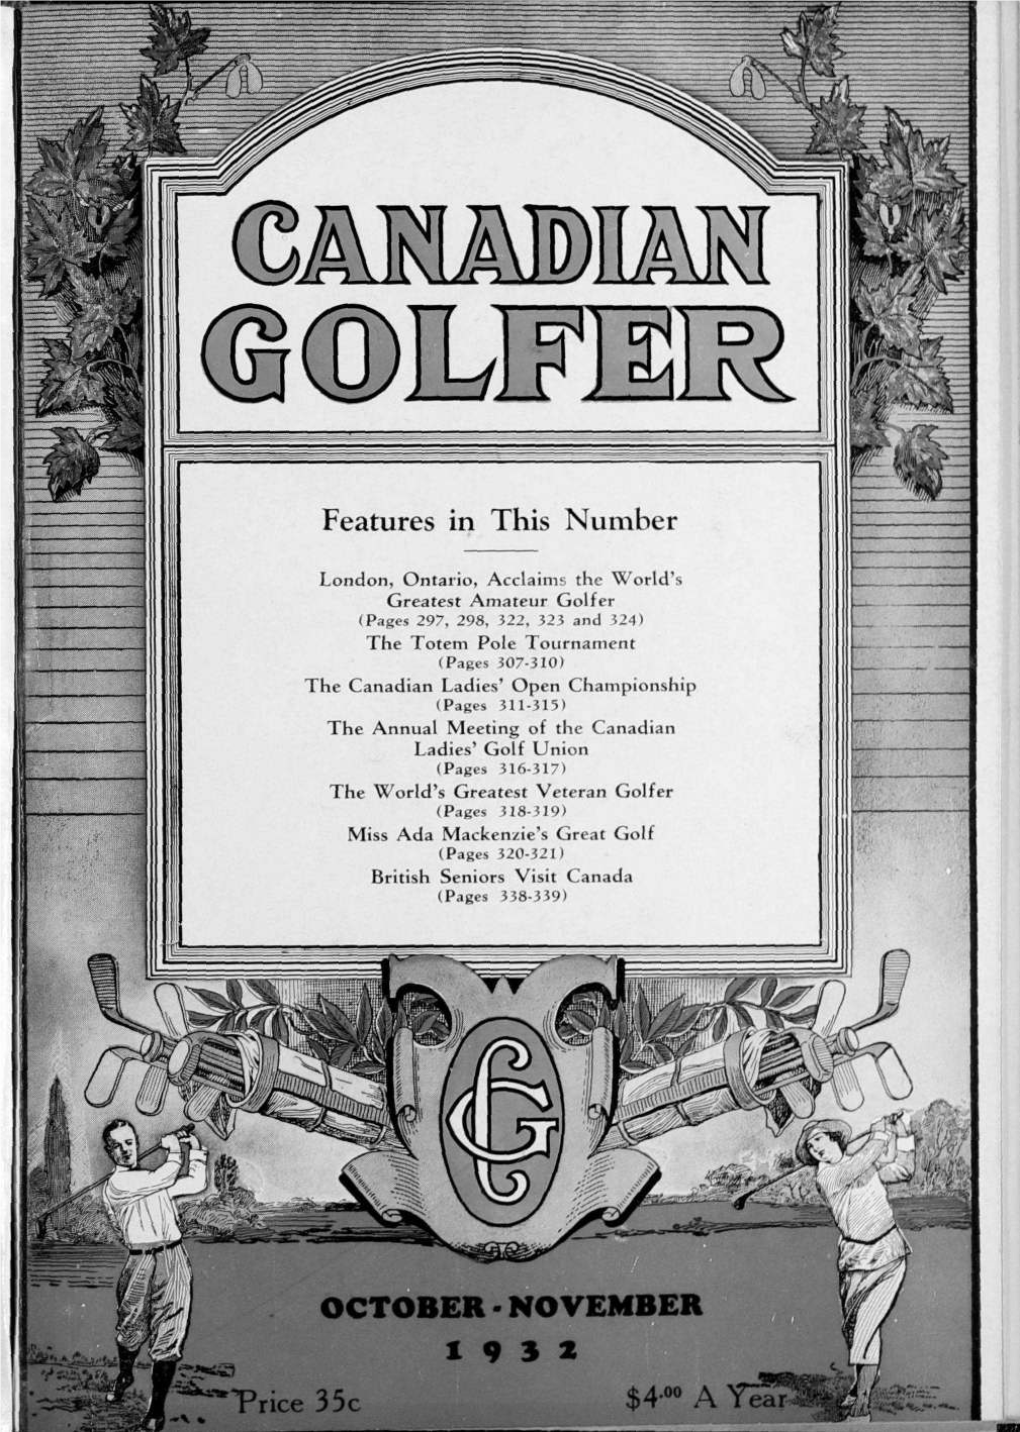 Canadian Golfer, October-November, 1932